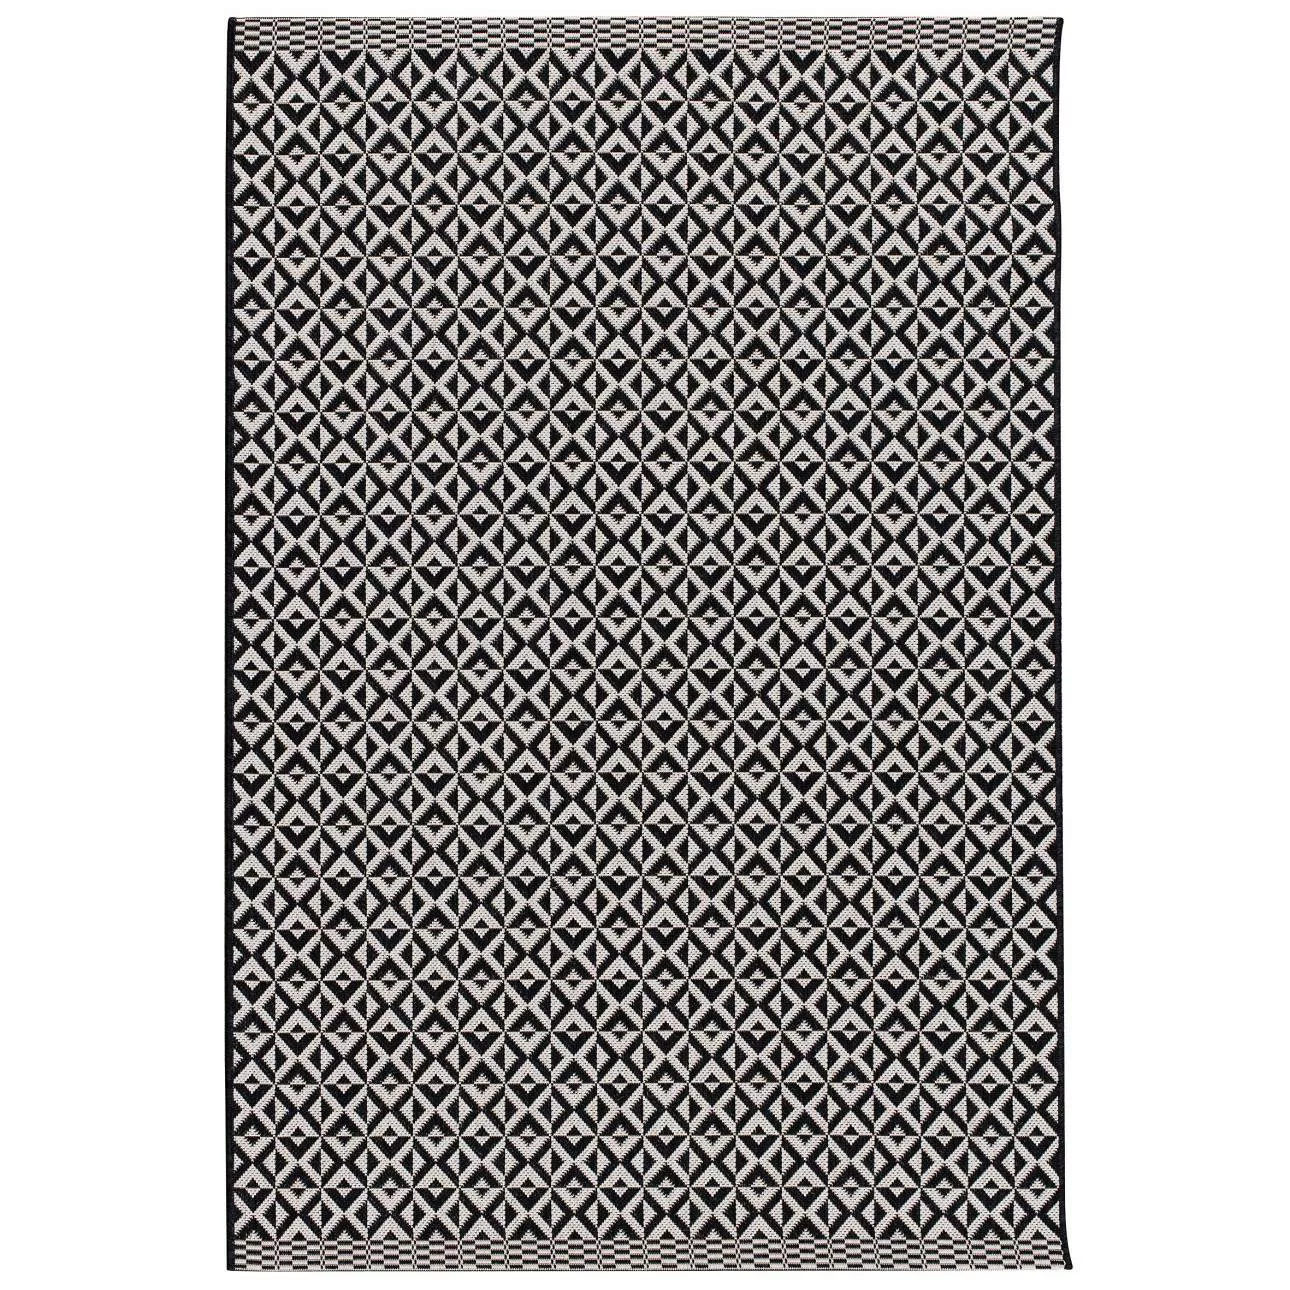 Teppich Modern Geometric black/ wool 160x230cm, 160 x 230 cm günstig online kaufen